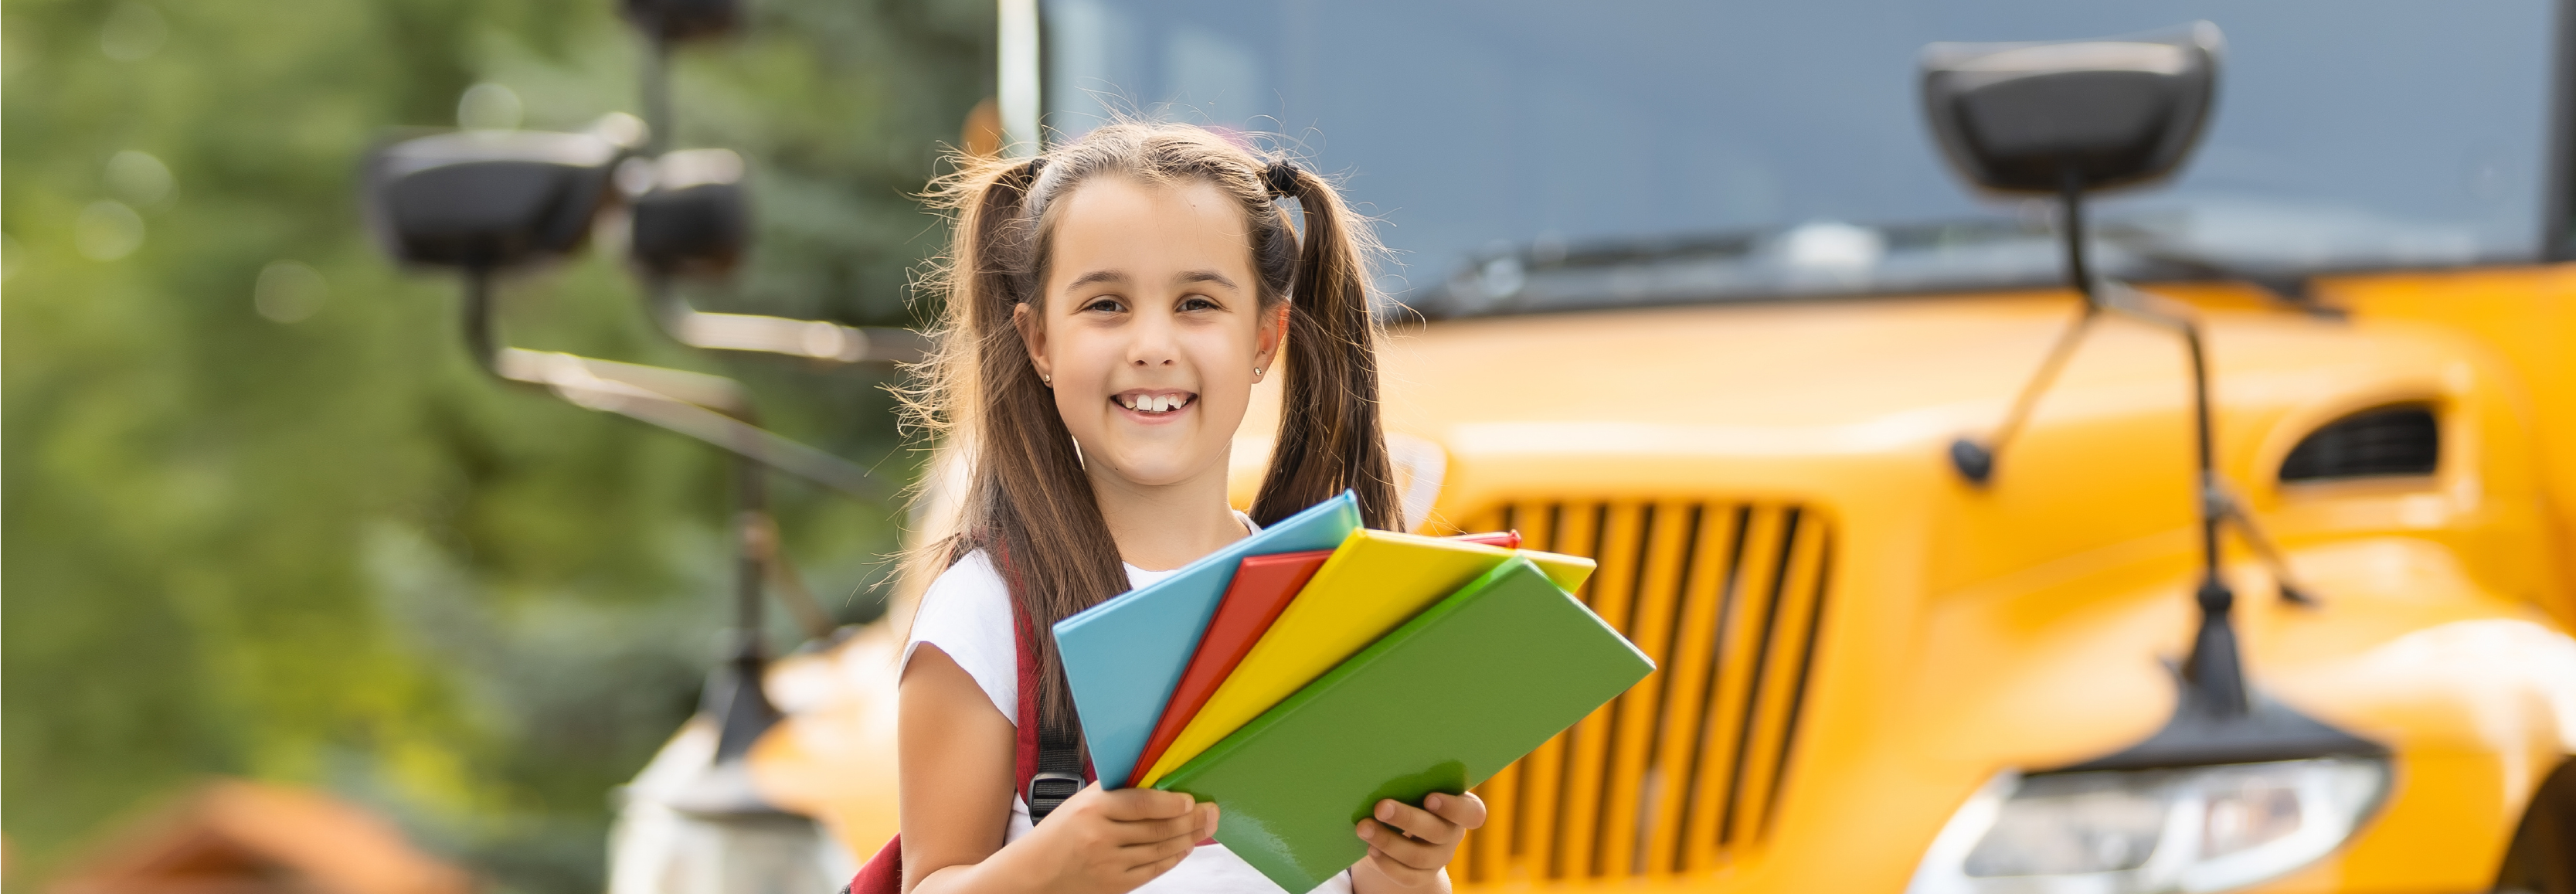 girl standing in front of school bus holding folders.